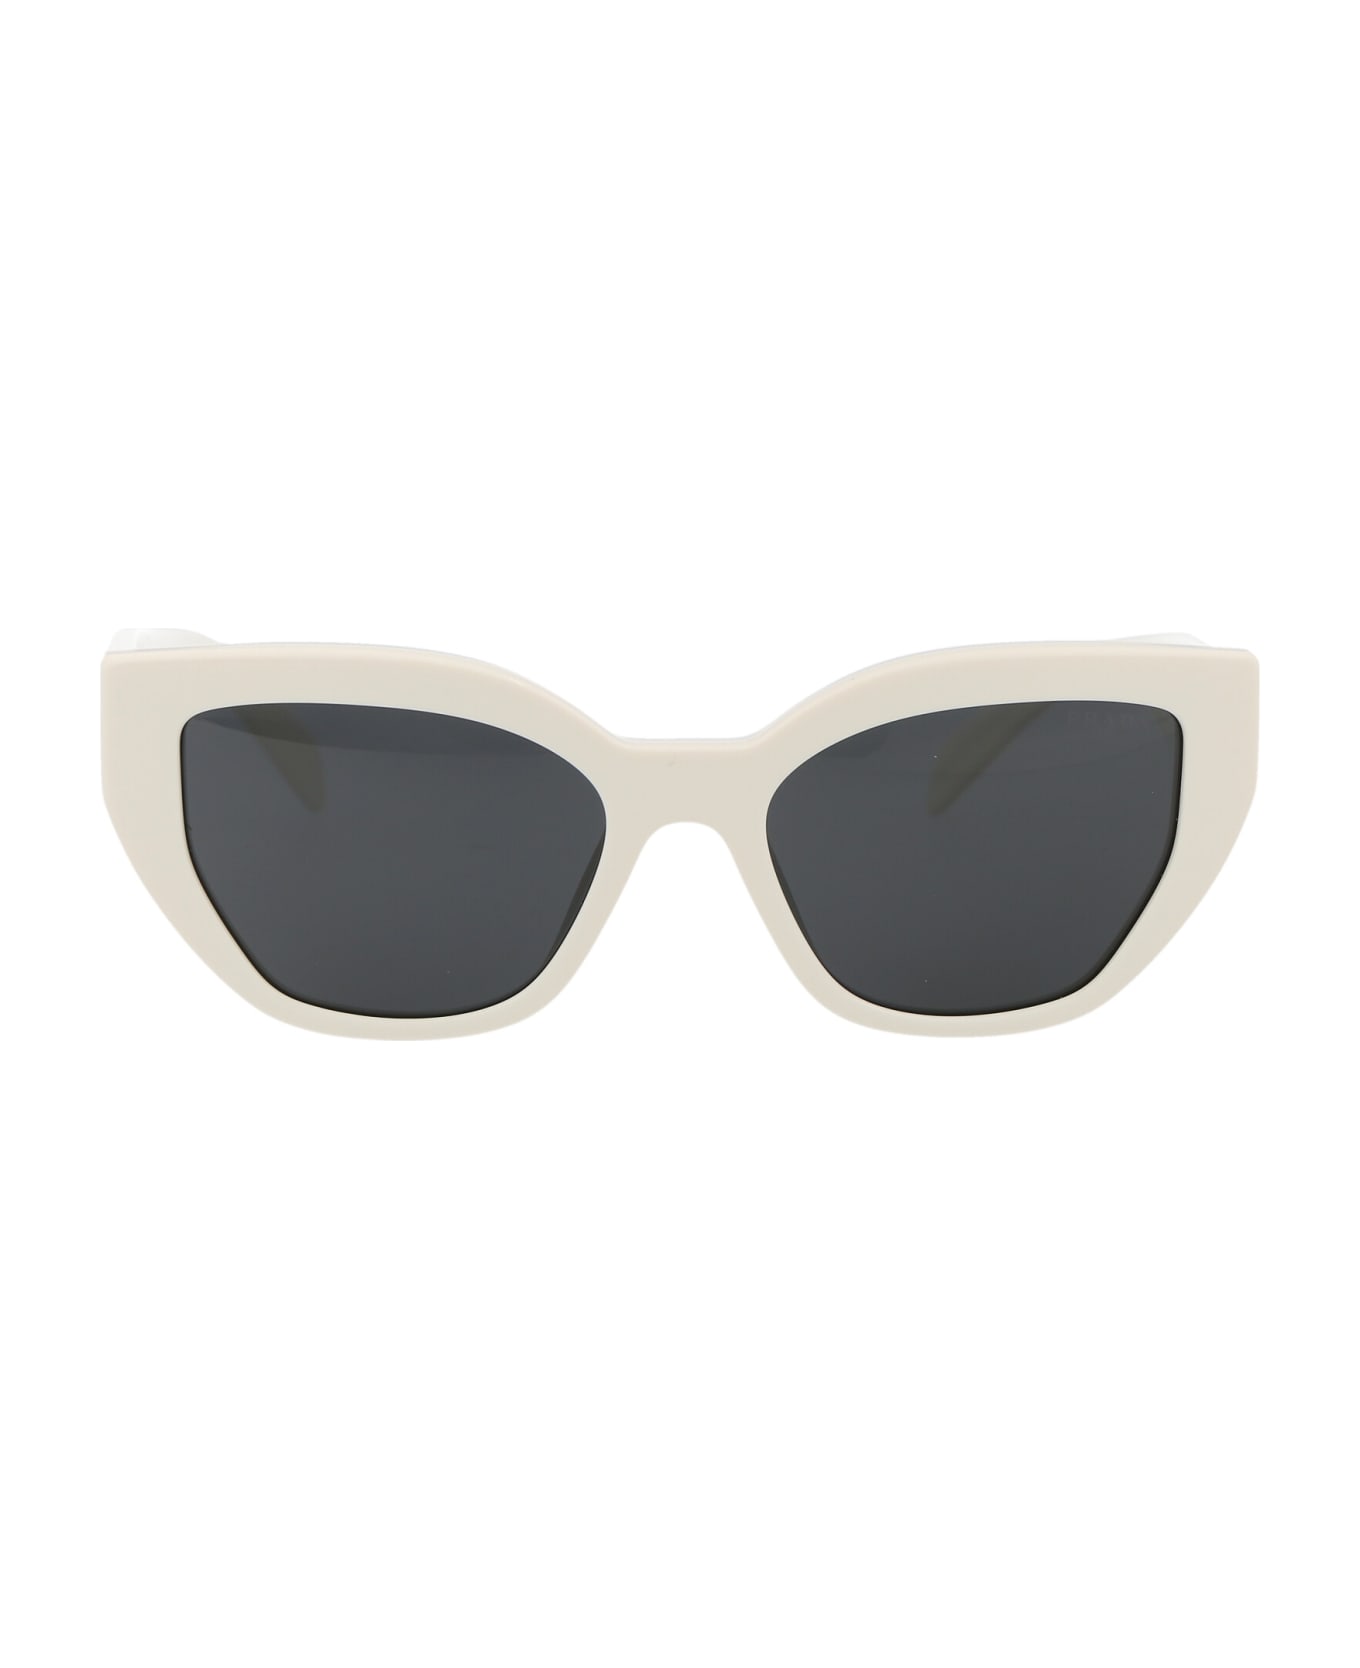 Prada Eyewear 0pr A09s Sunglasses - 1425S0 TALC